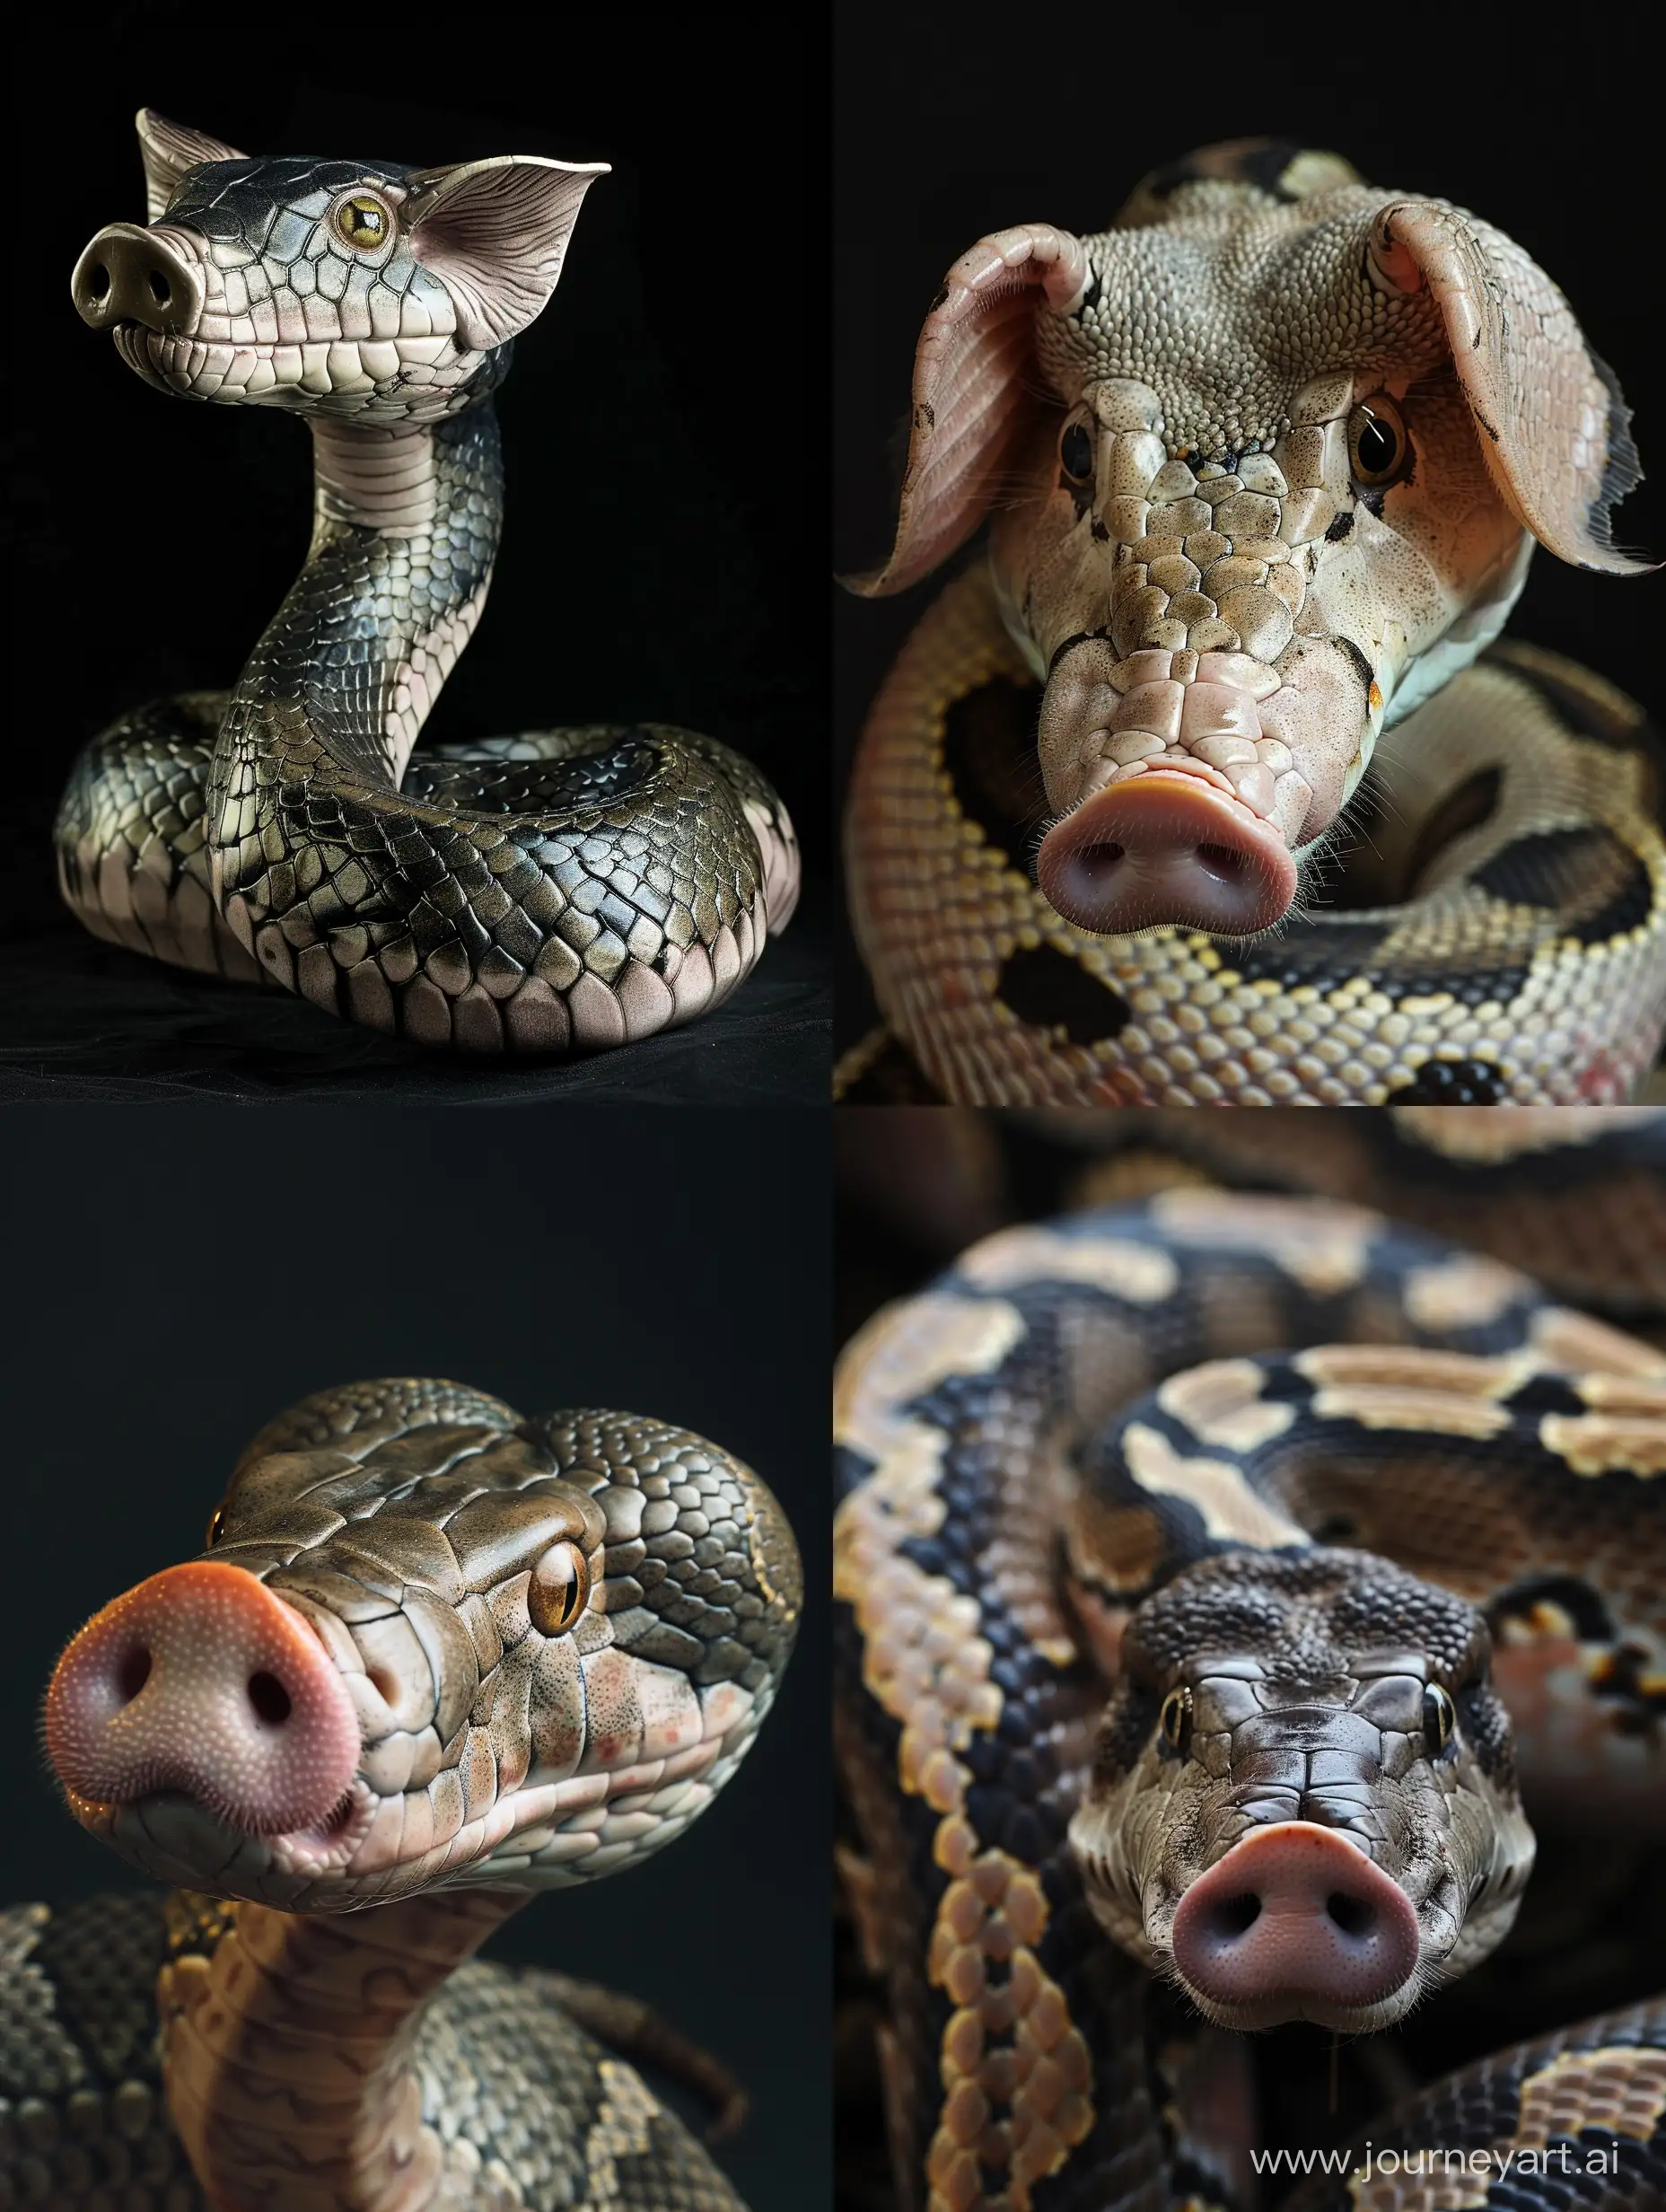 Bizarre-Hybrid-Snake-with-Pigs-Head